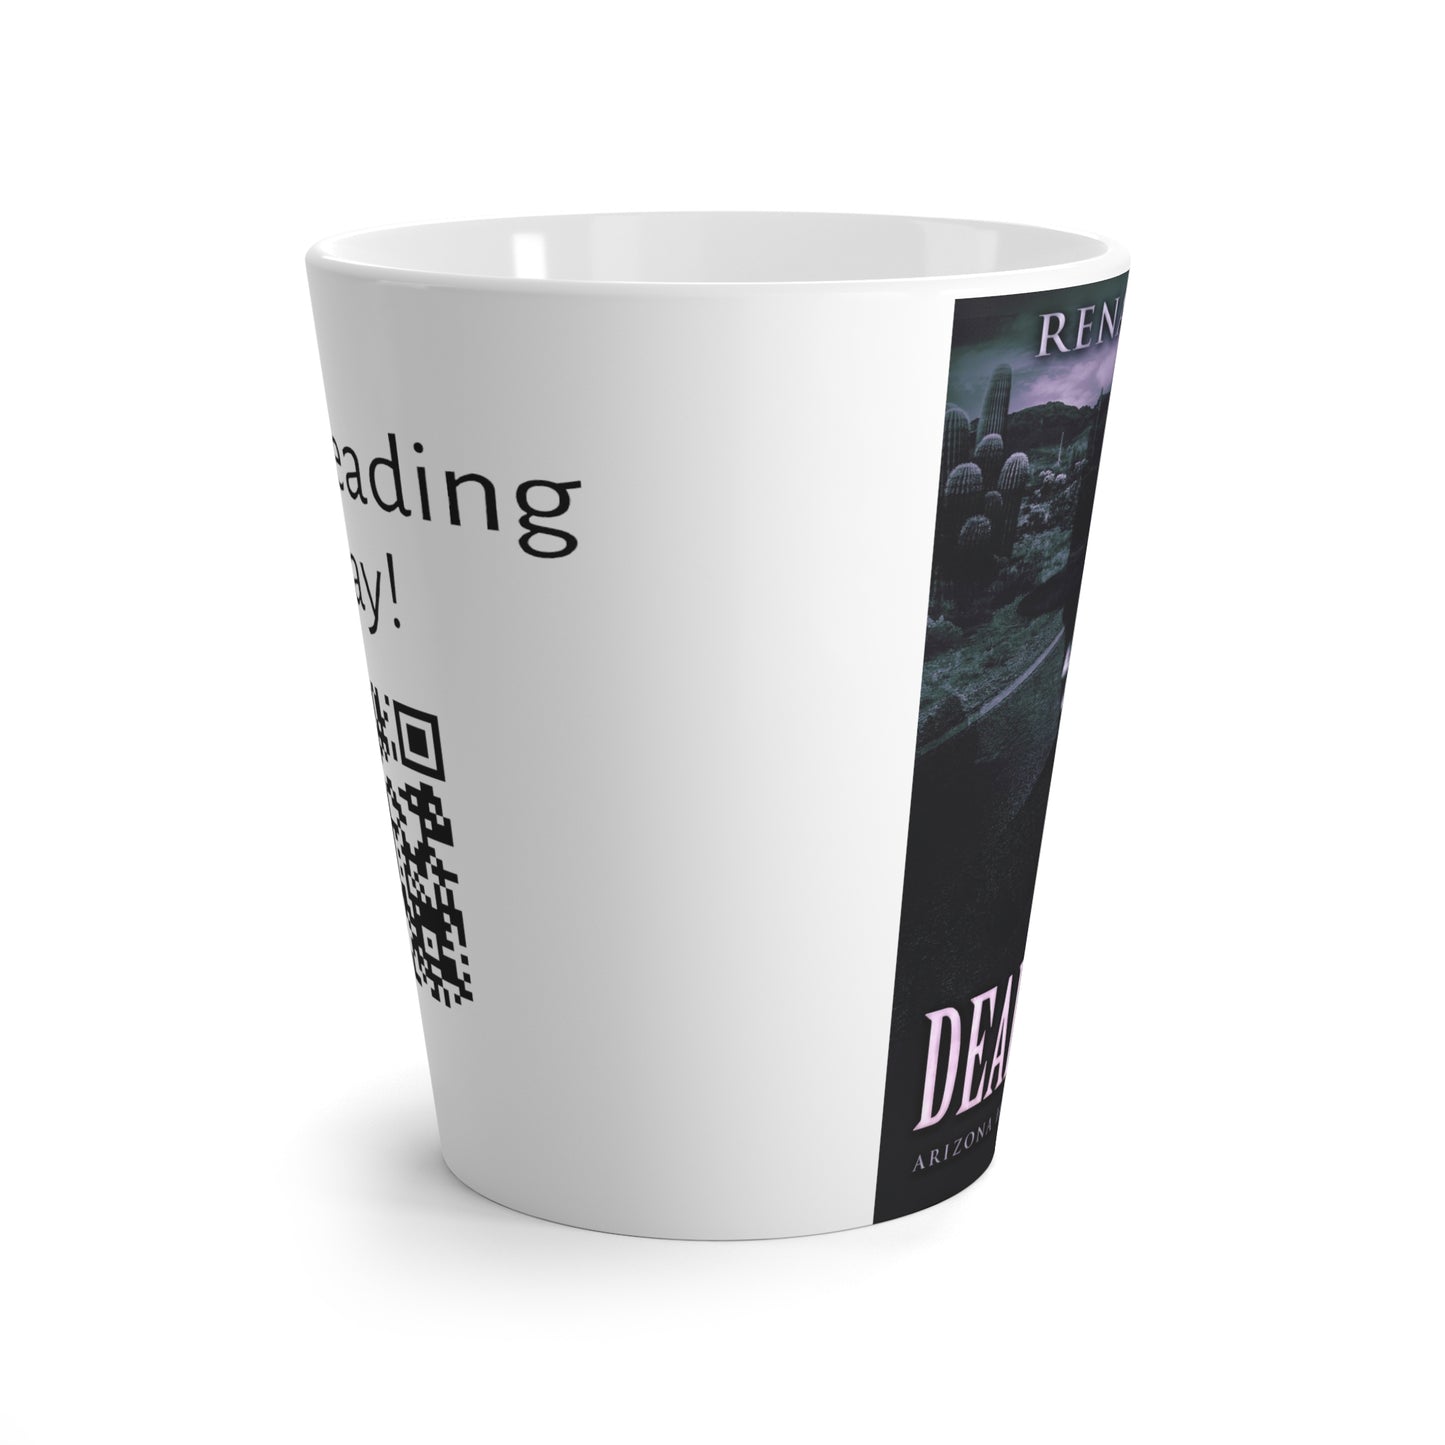 Deadly Deed - Latte Mug